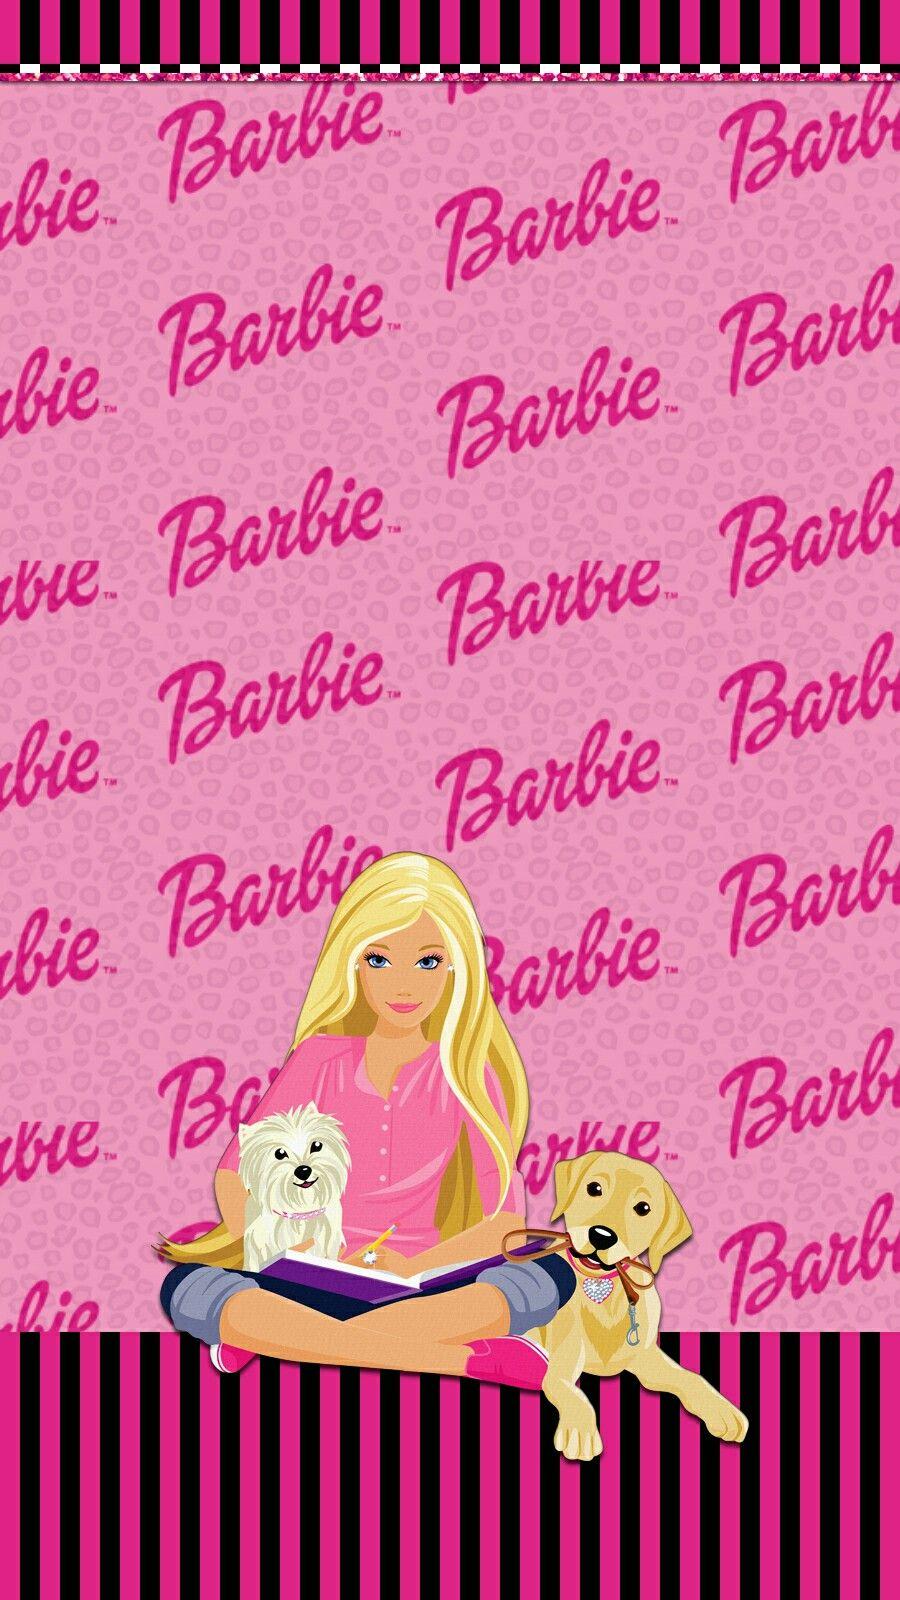 Barbie. Barbie painting, Barbie image, Barbie logo